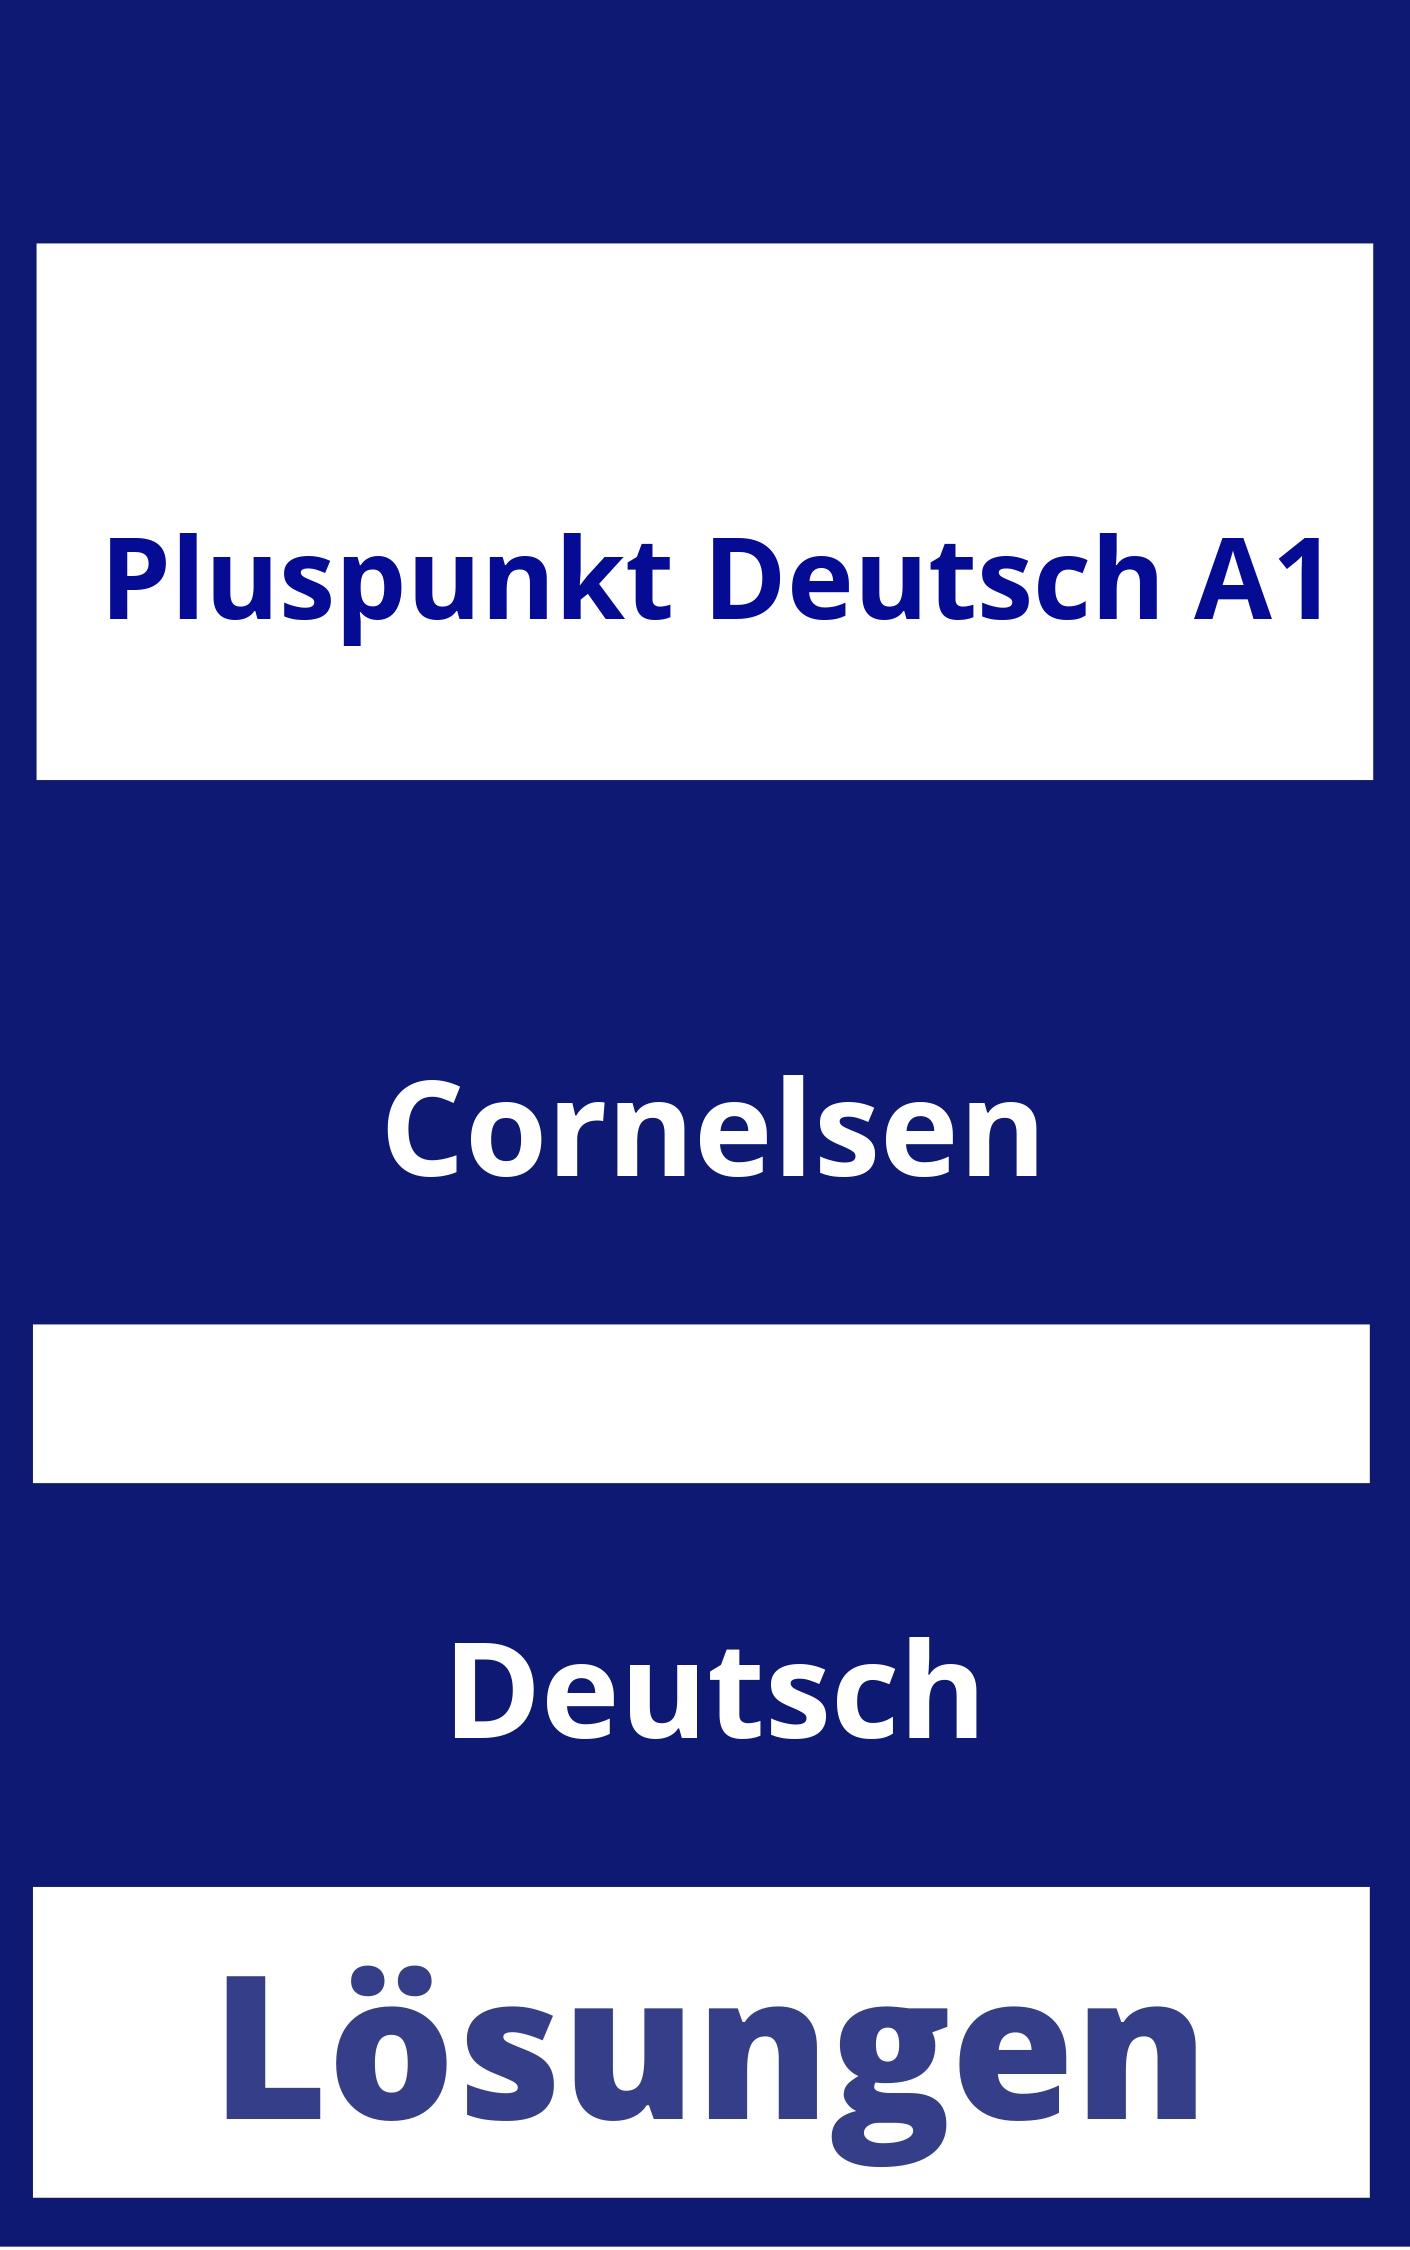 Pluspunkt Deutsch A1 Lösungen PDF